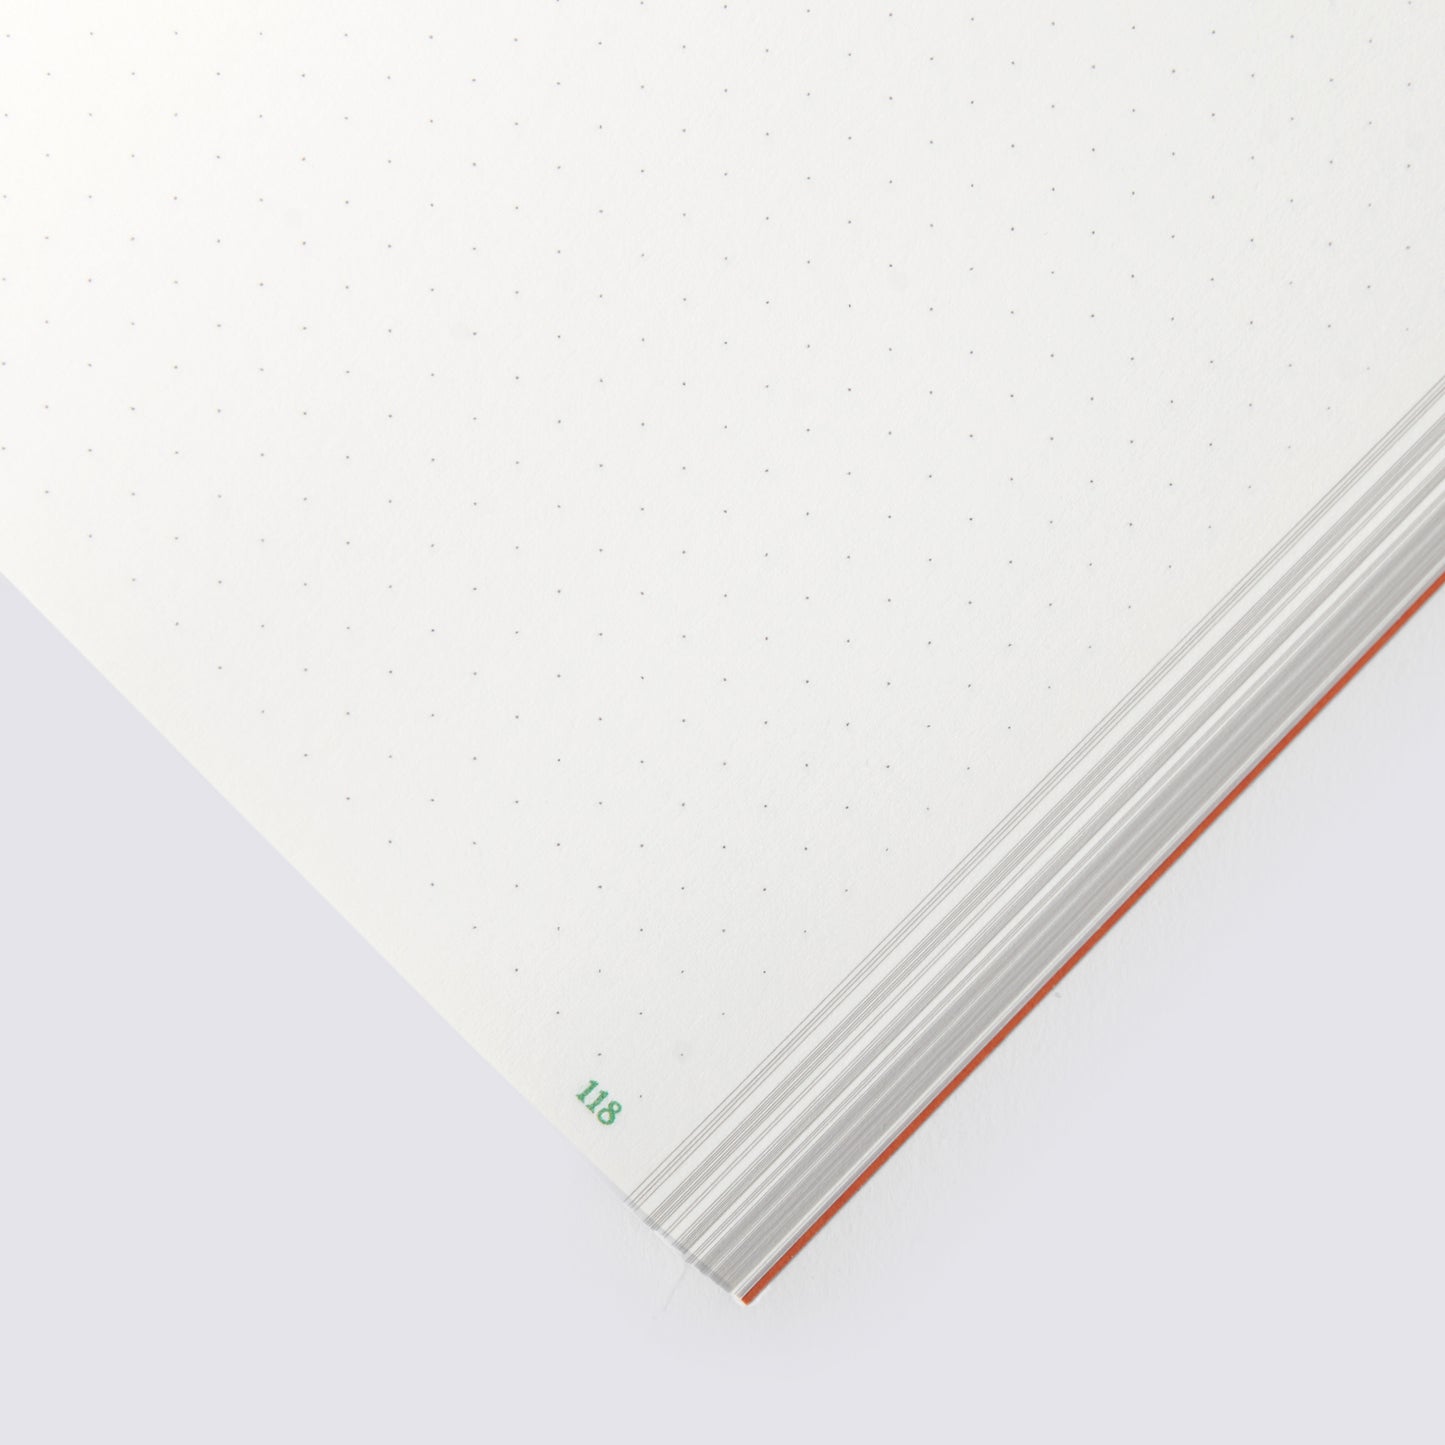 Marais Notebook, Pen and Band Trio - Primo Gel Pen / Dot Grid Paper